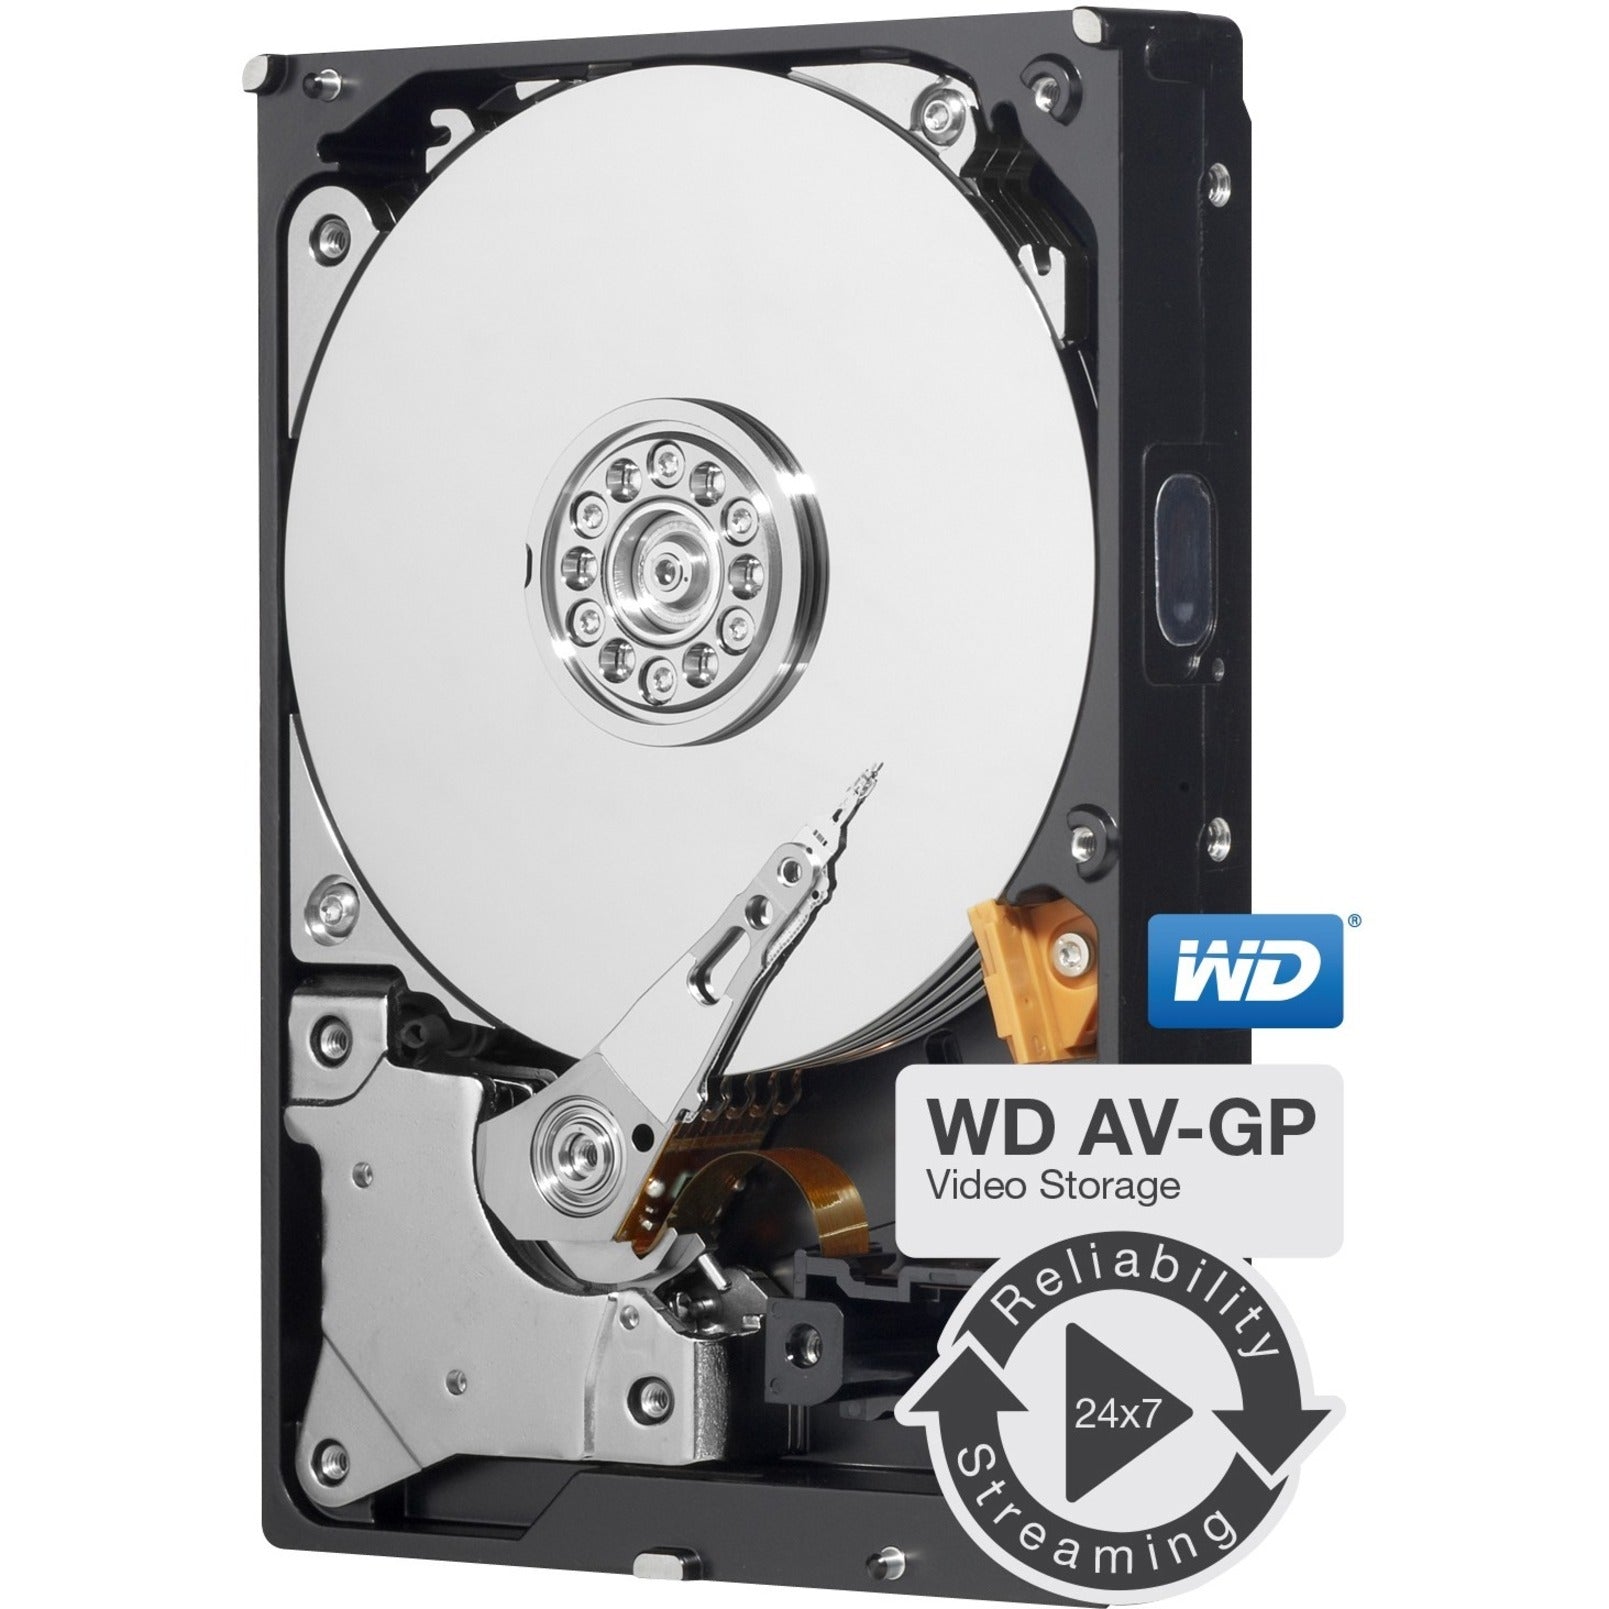 WD WD20EURX AV-GP 2 TB Hard Drive, High Performance and Energy Efficient Storage Solution